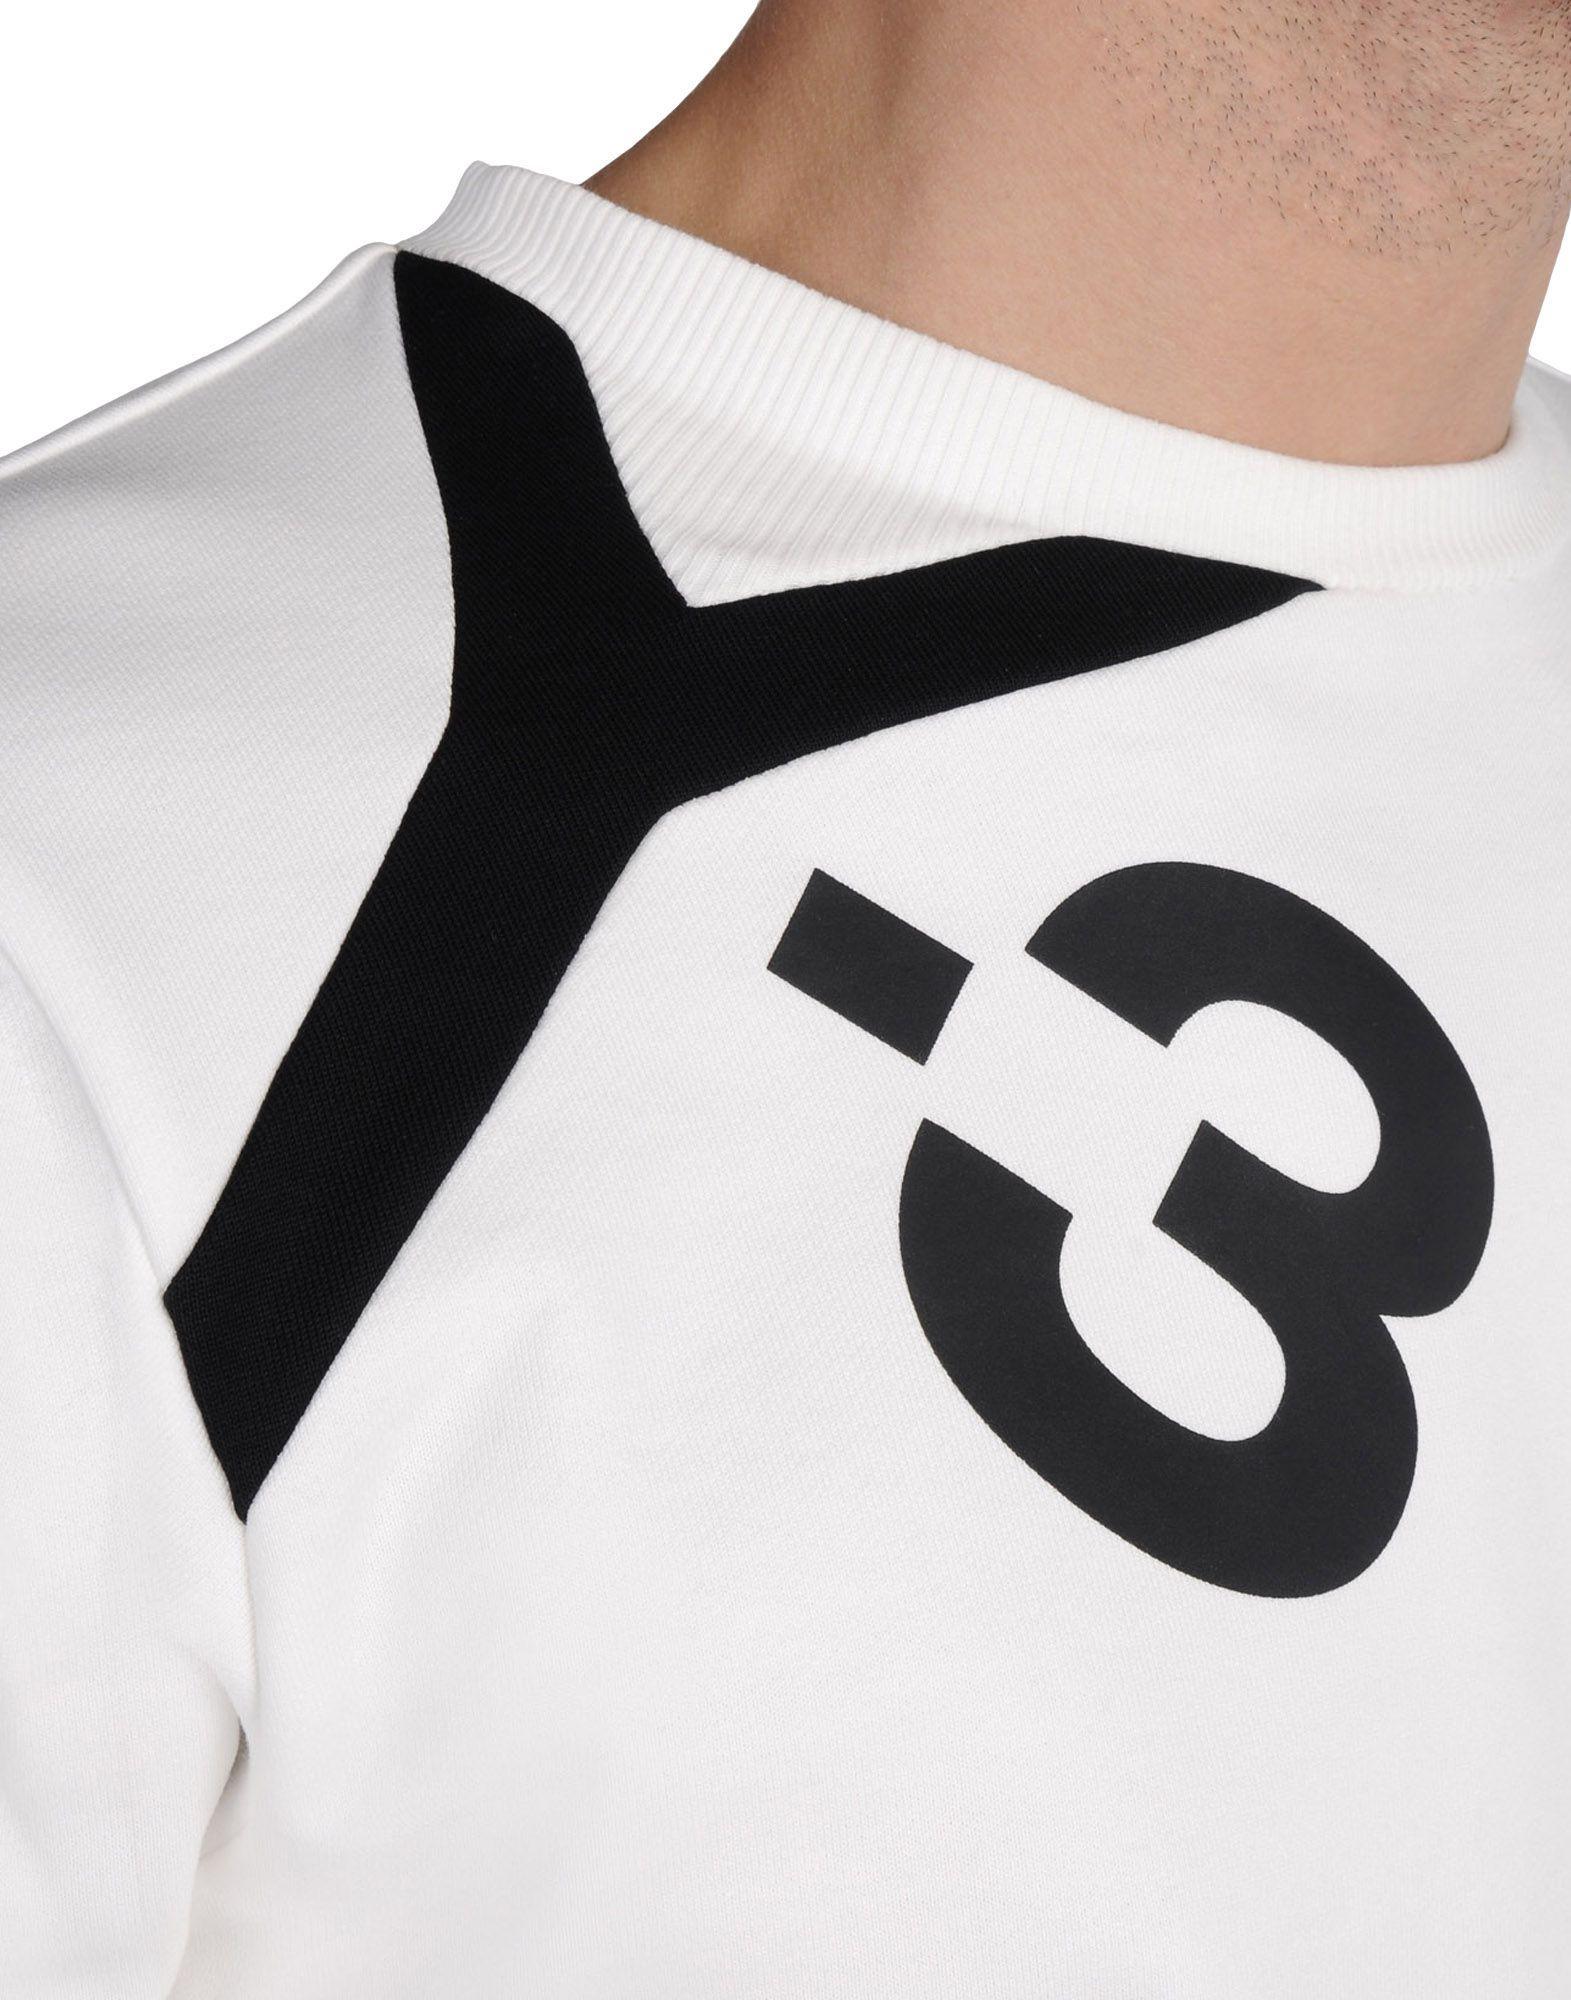 Y3 Logo - Y 3 LOGO SWEATER Sweatshirts | Adidas Y-3 Official Site